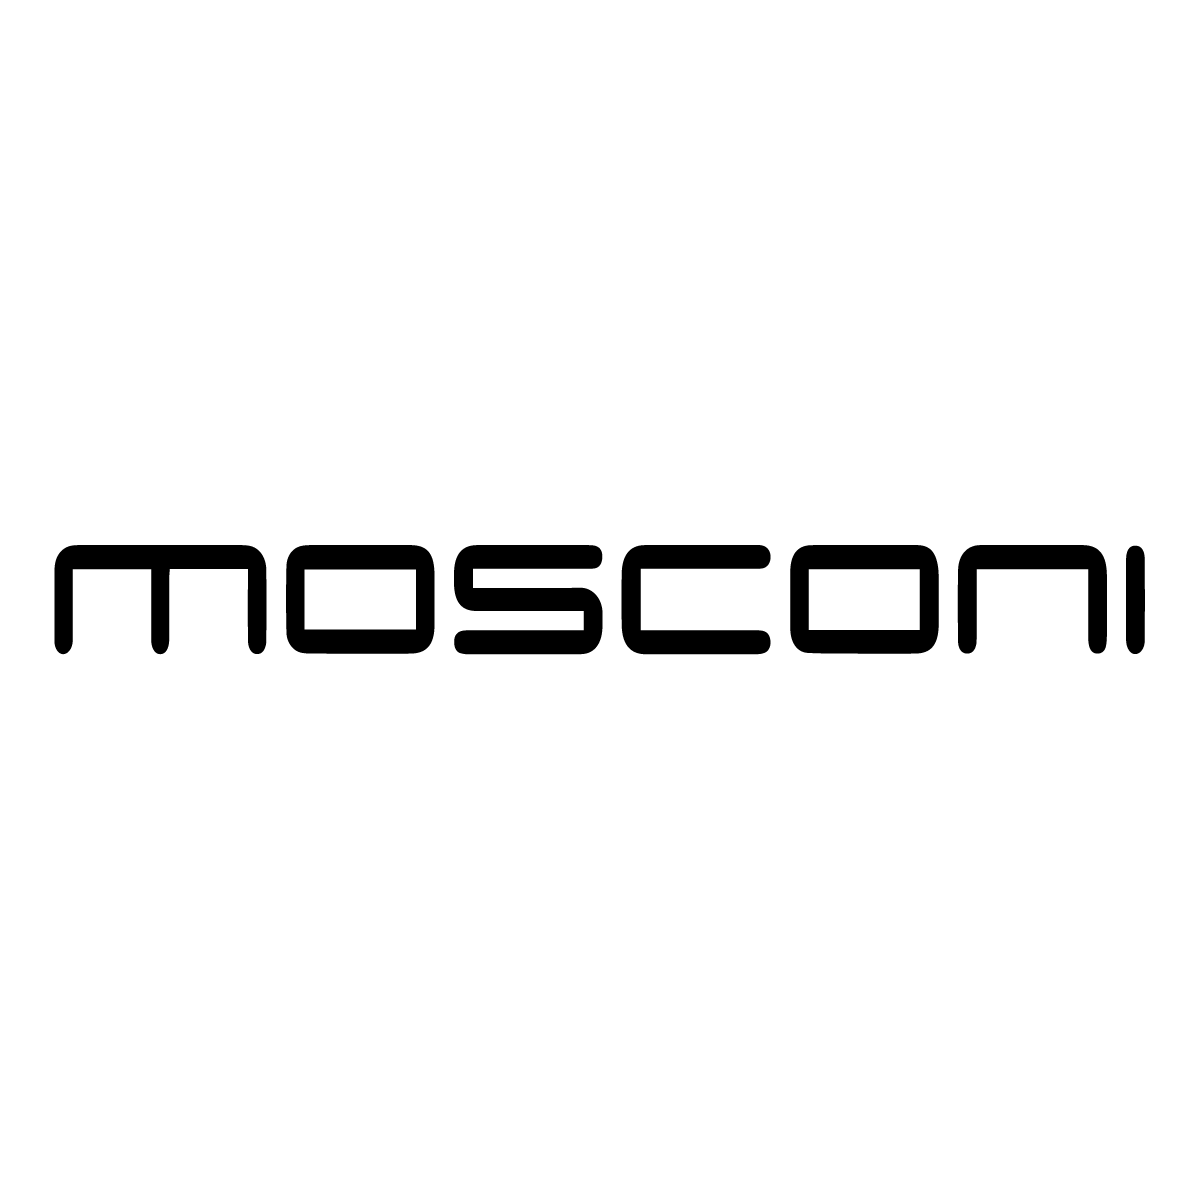 Mosconi